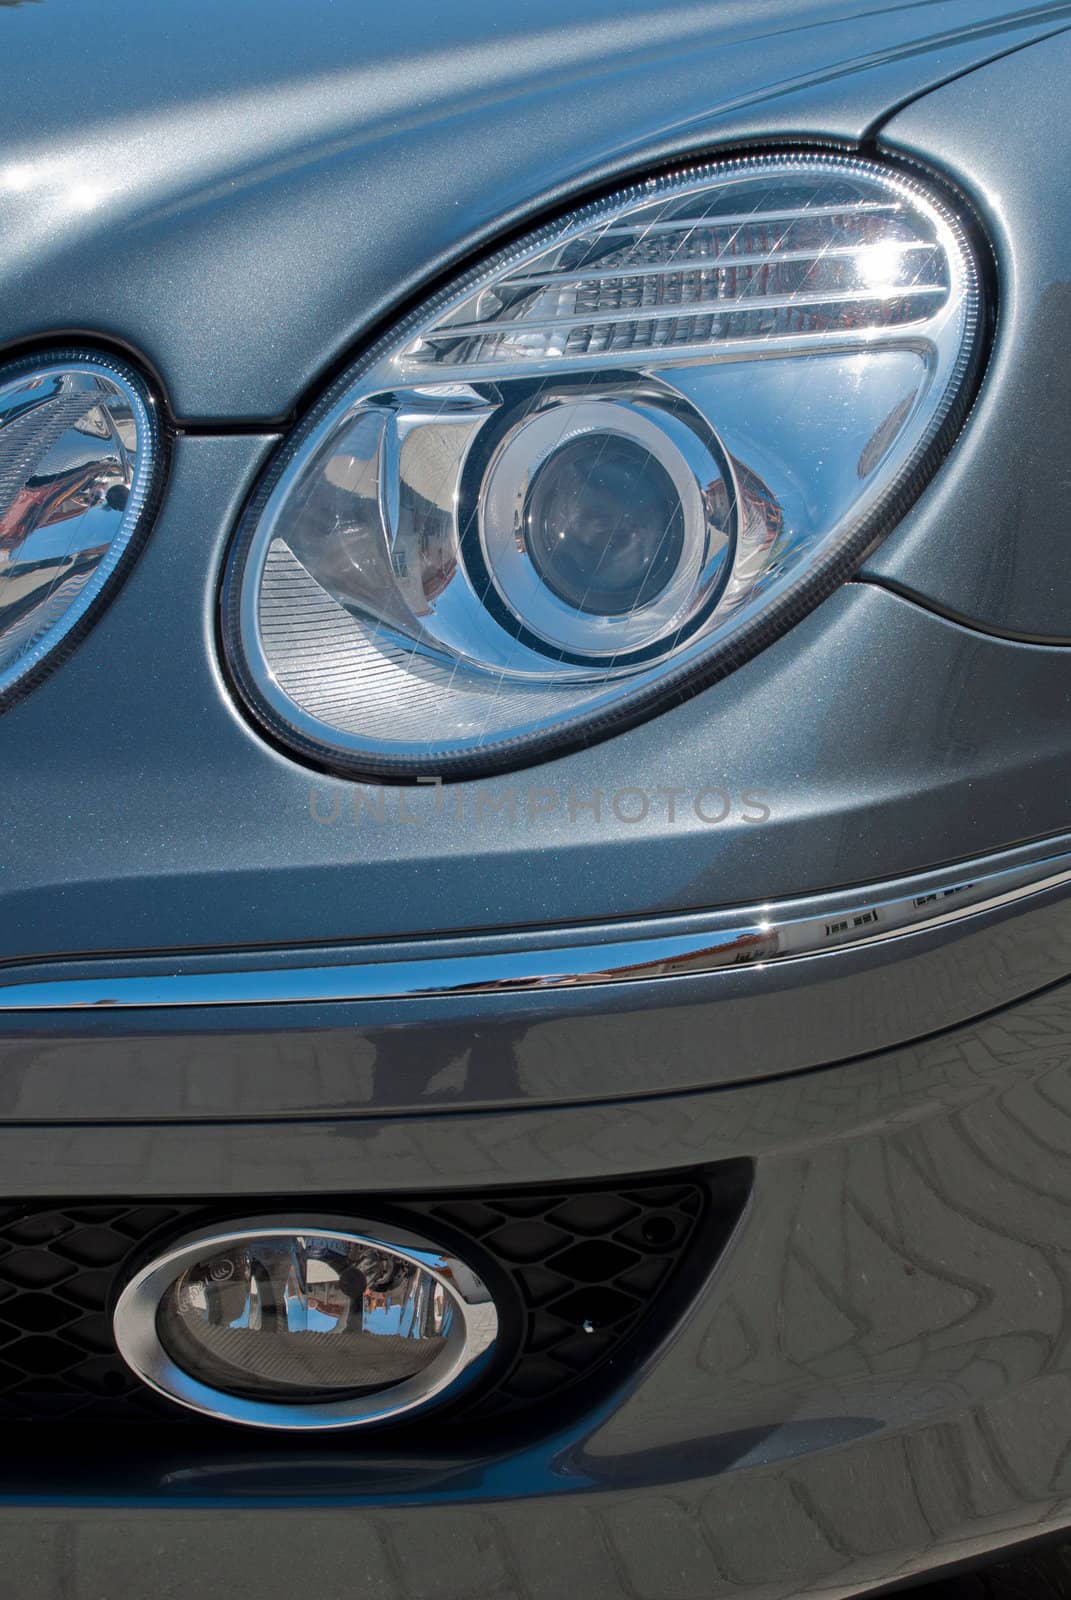 circular car head lights on a gray metallic sports car